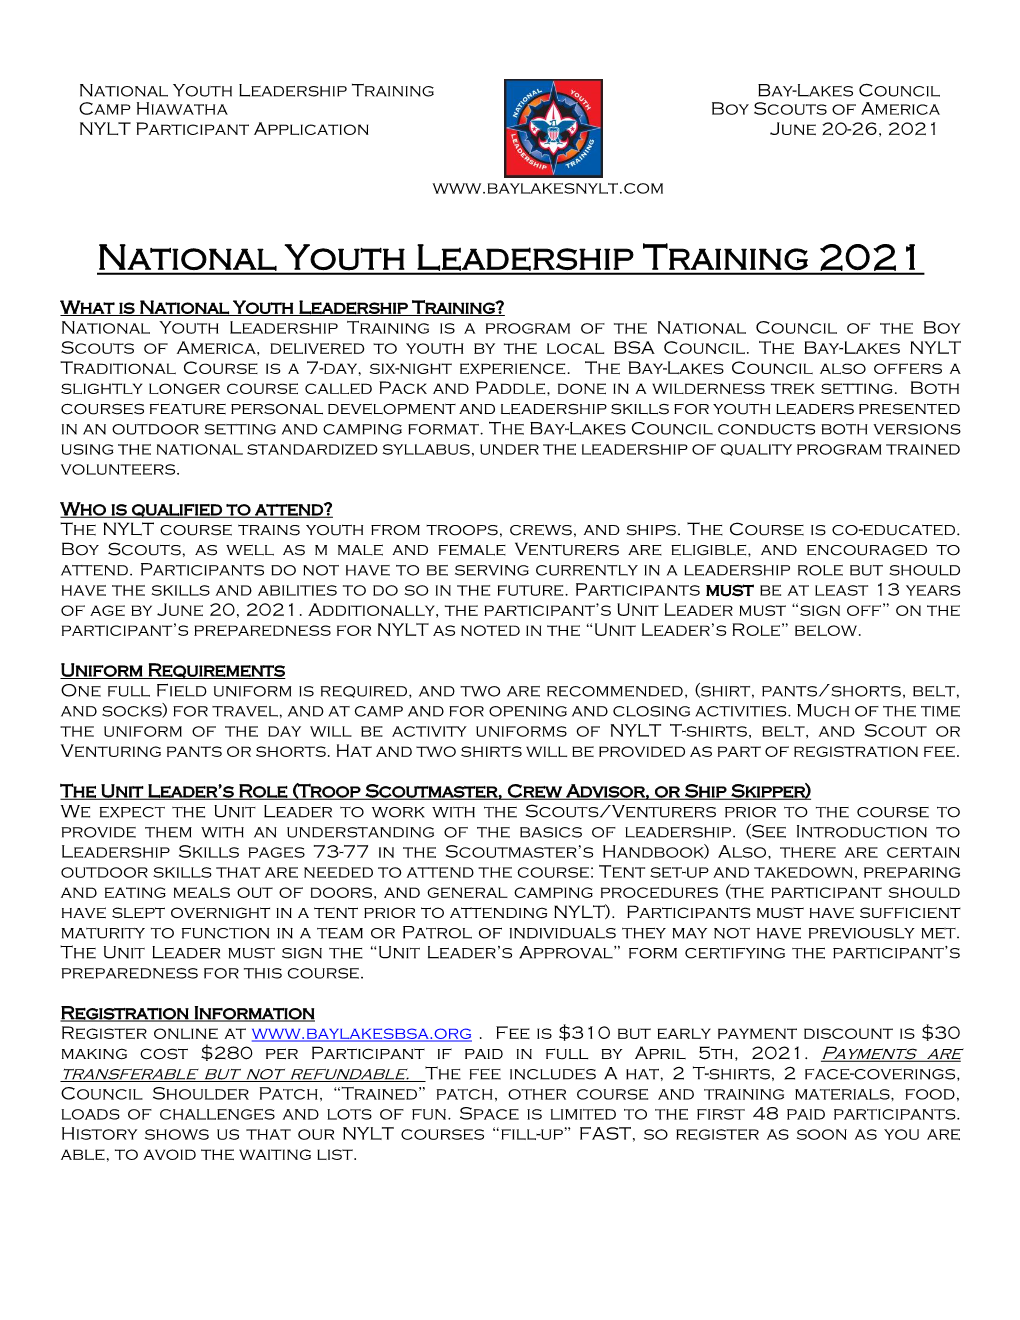 National Youth Leadership Training 2021